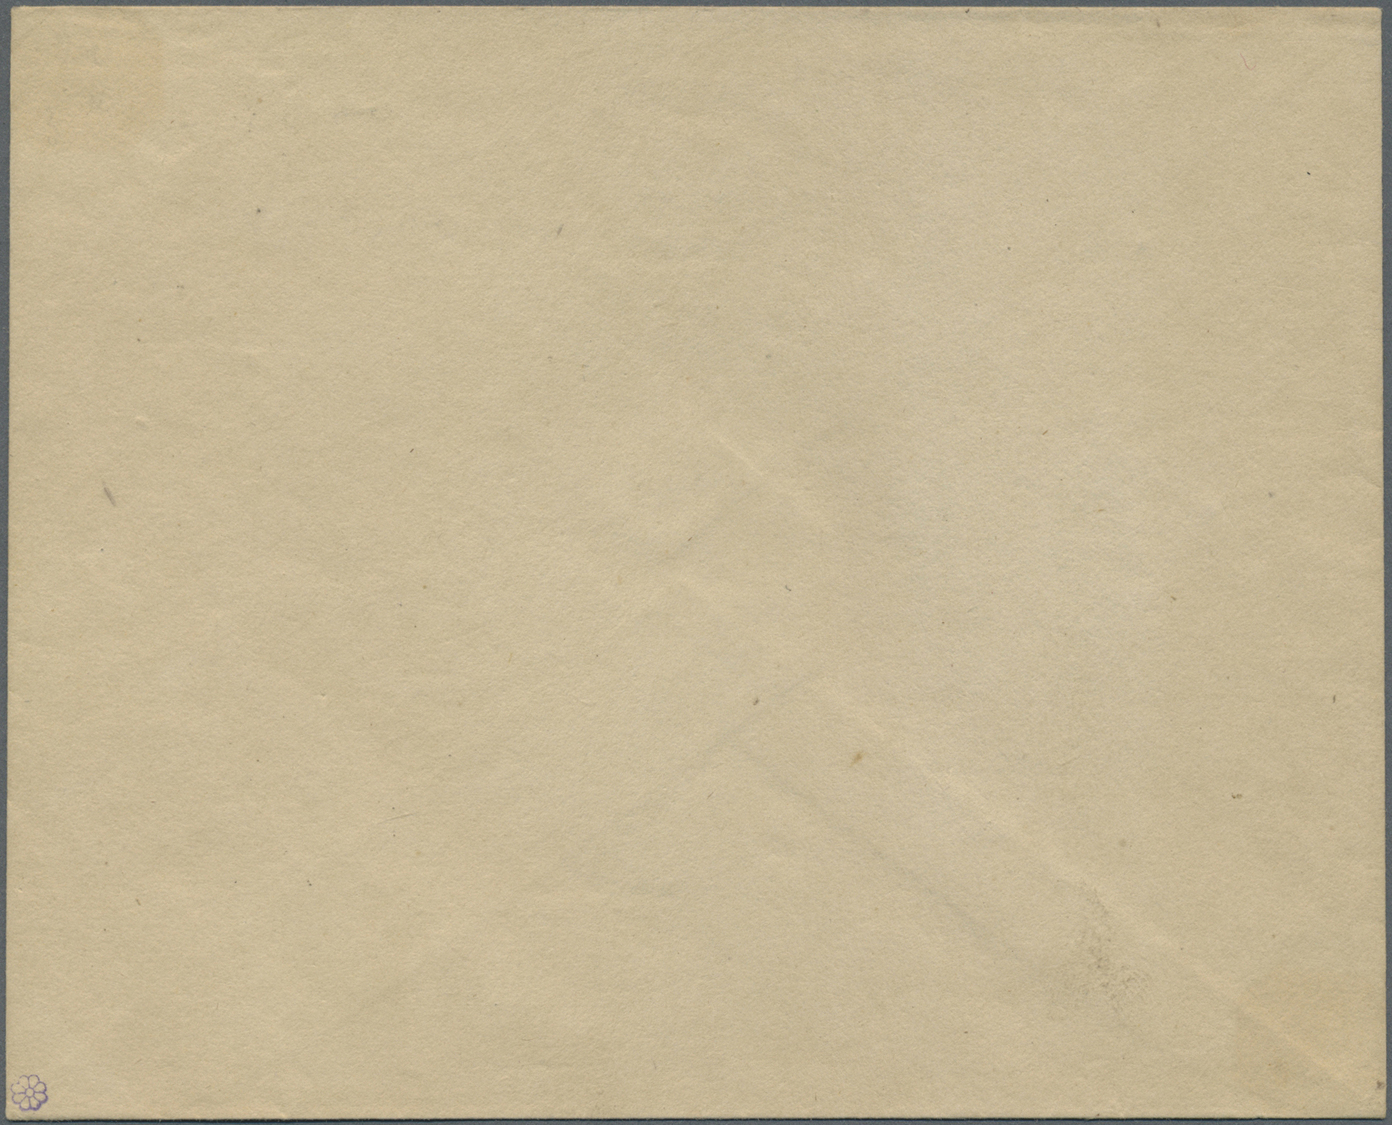 GA Russland - Ganzsachen: 1848, First Issue 30 + 1 K. Carmine Envelope, Unused, Slight Toned, Otherwise Fine - Stamped Stationery